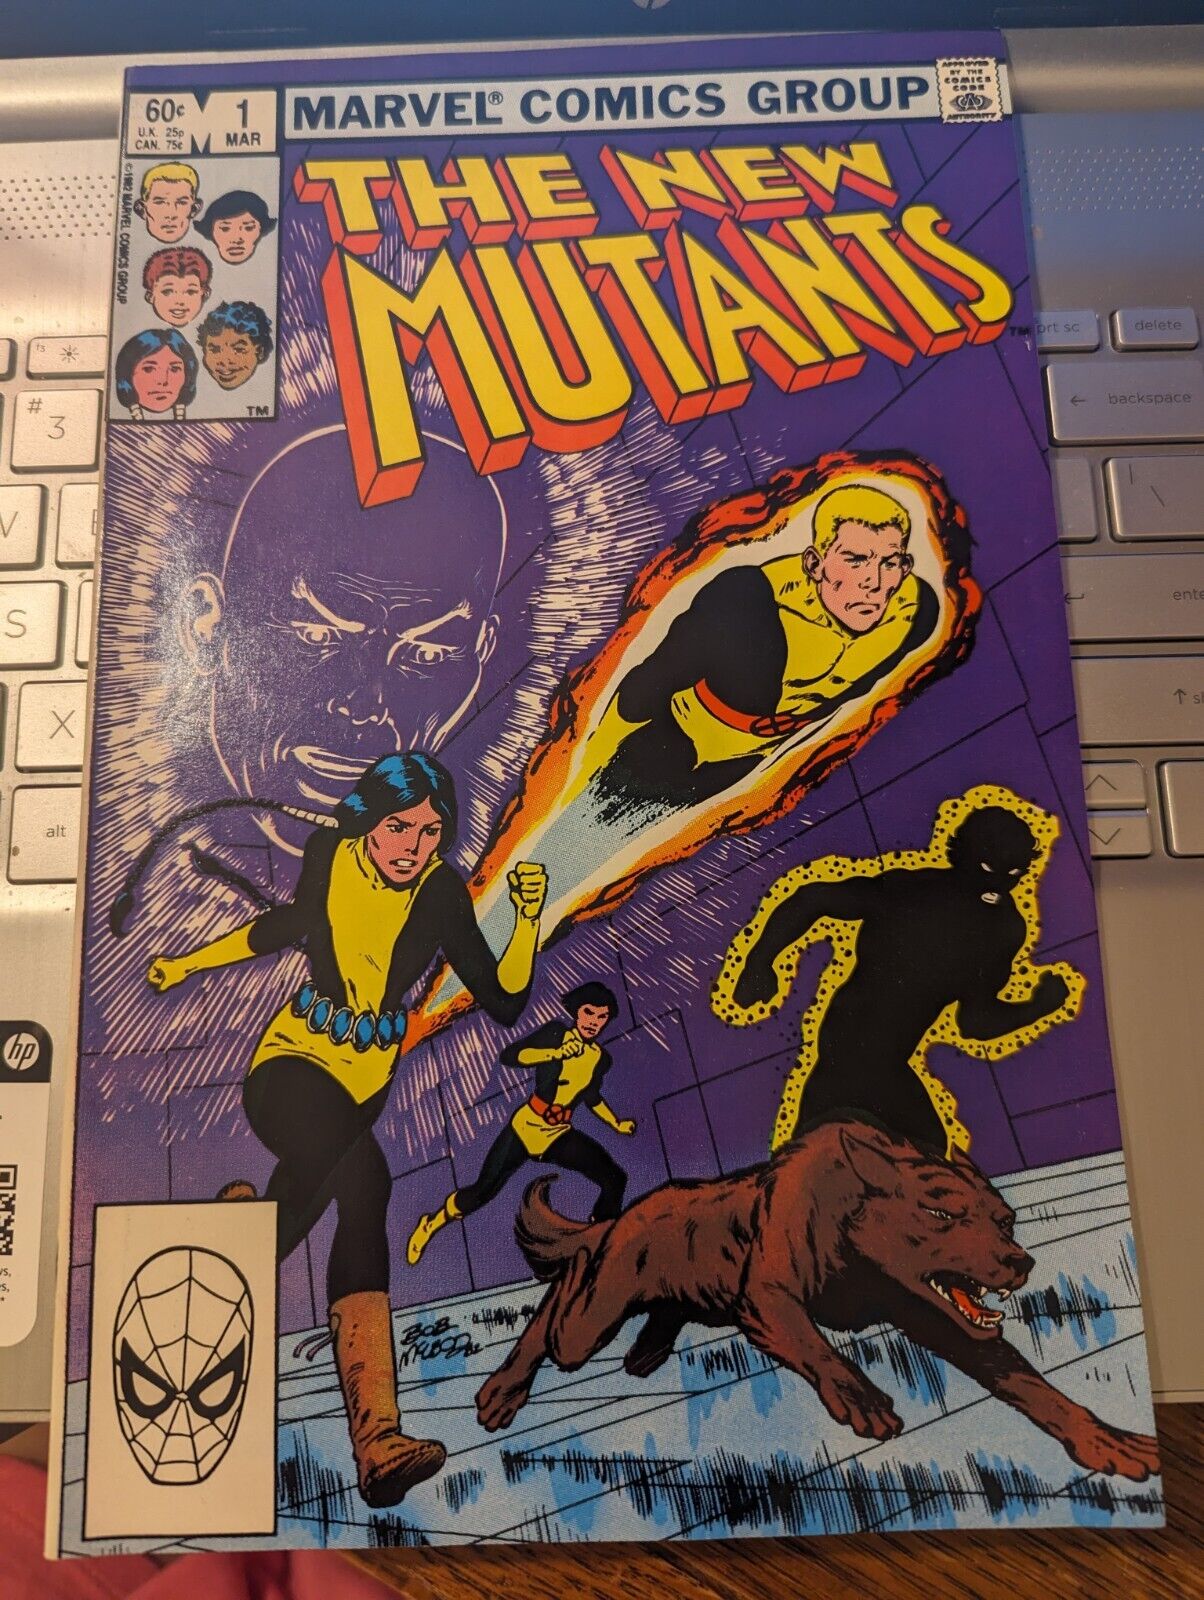 The New Mutants #1 (Marvel Comics March 1983)